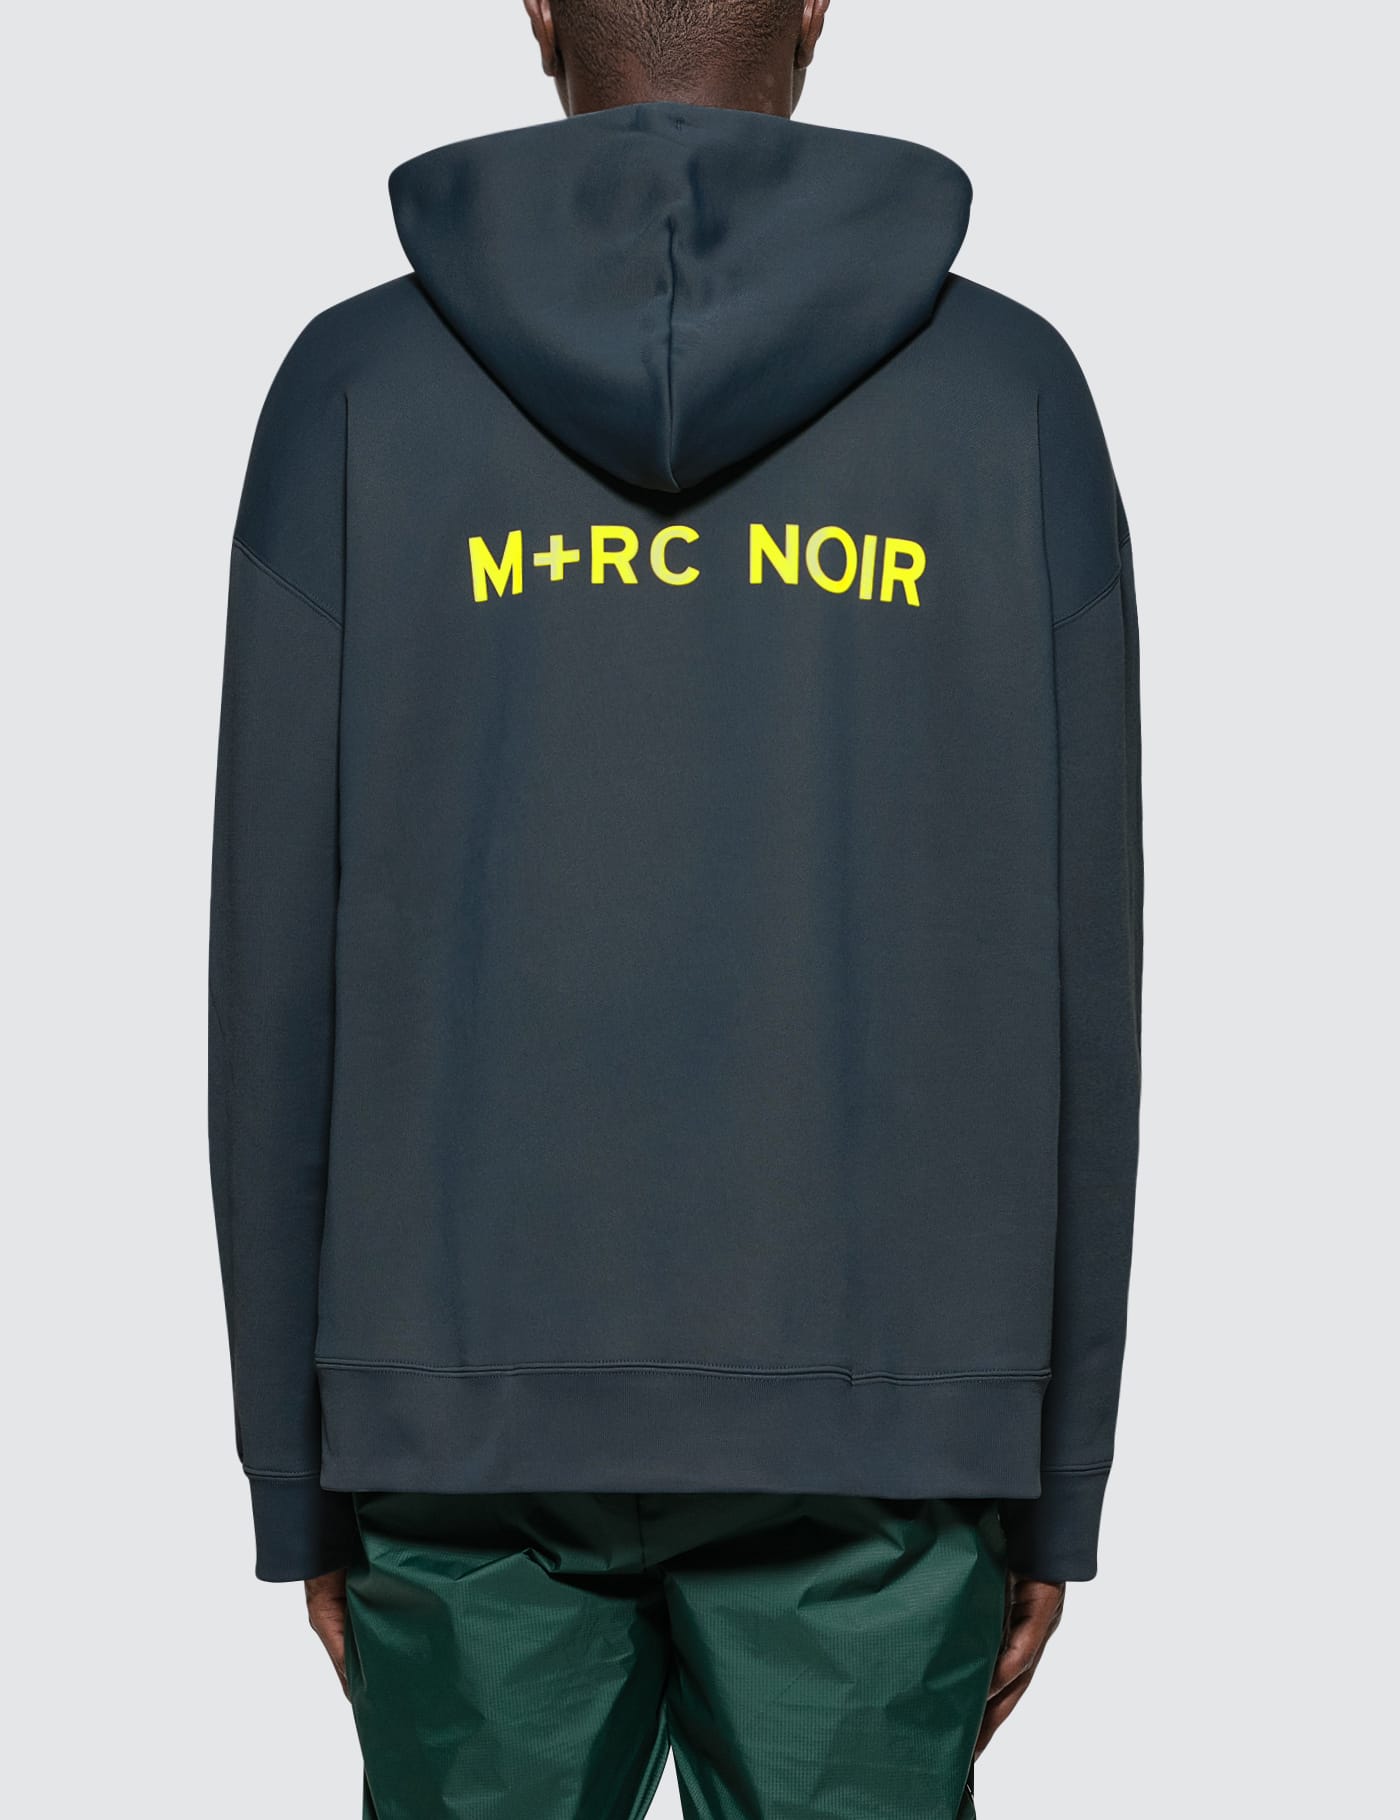 m+rc noir no basic gray logo hoodie